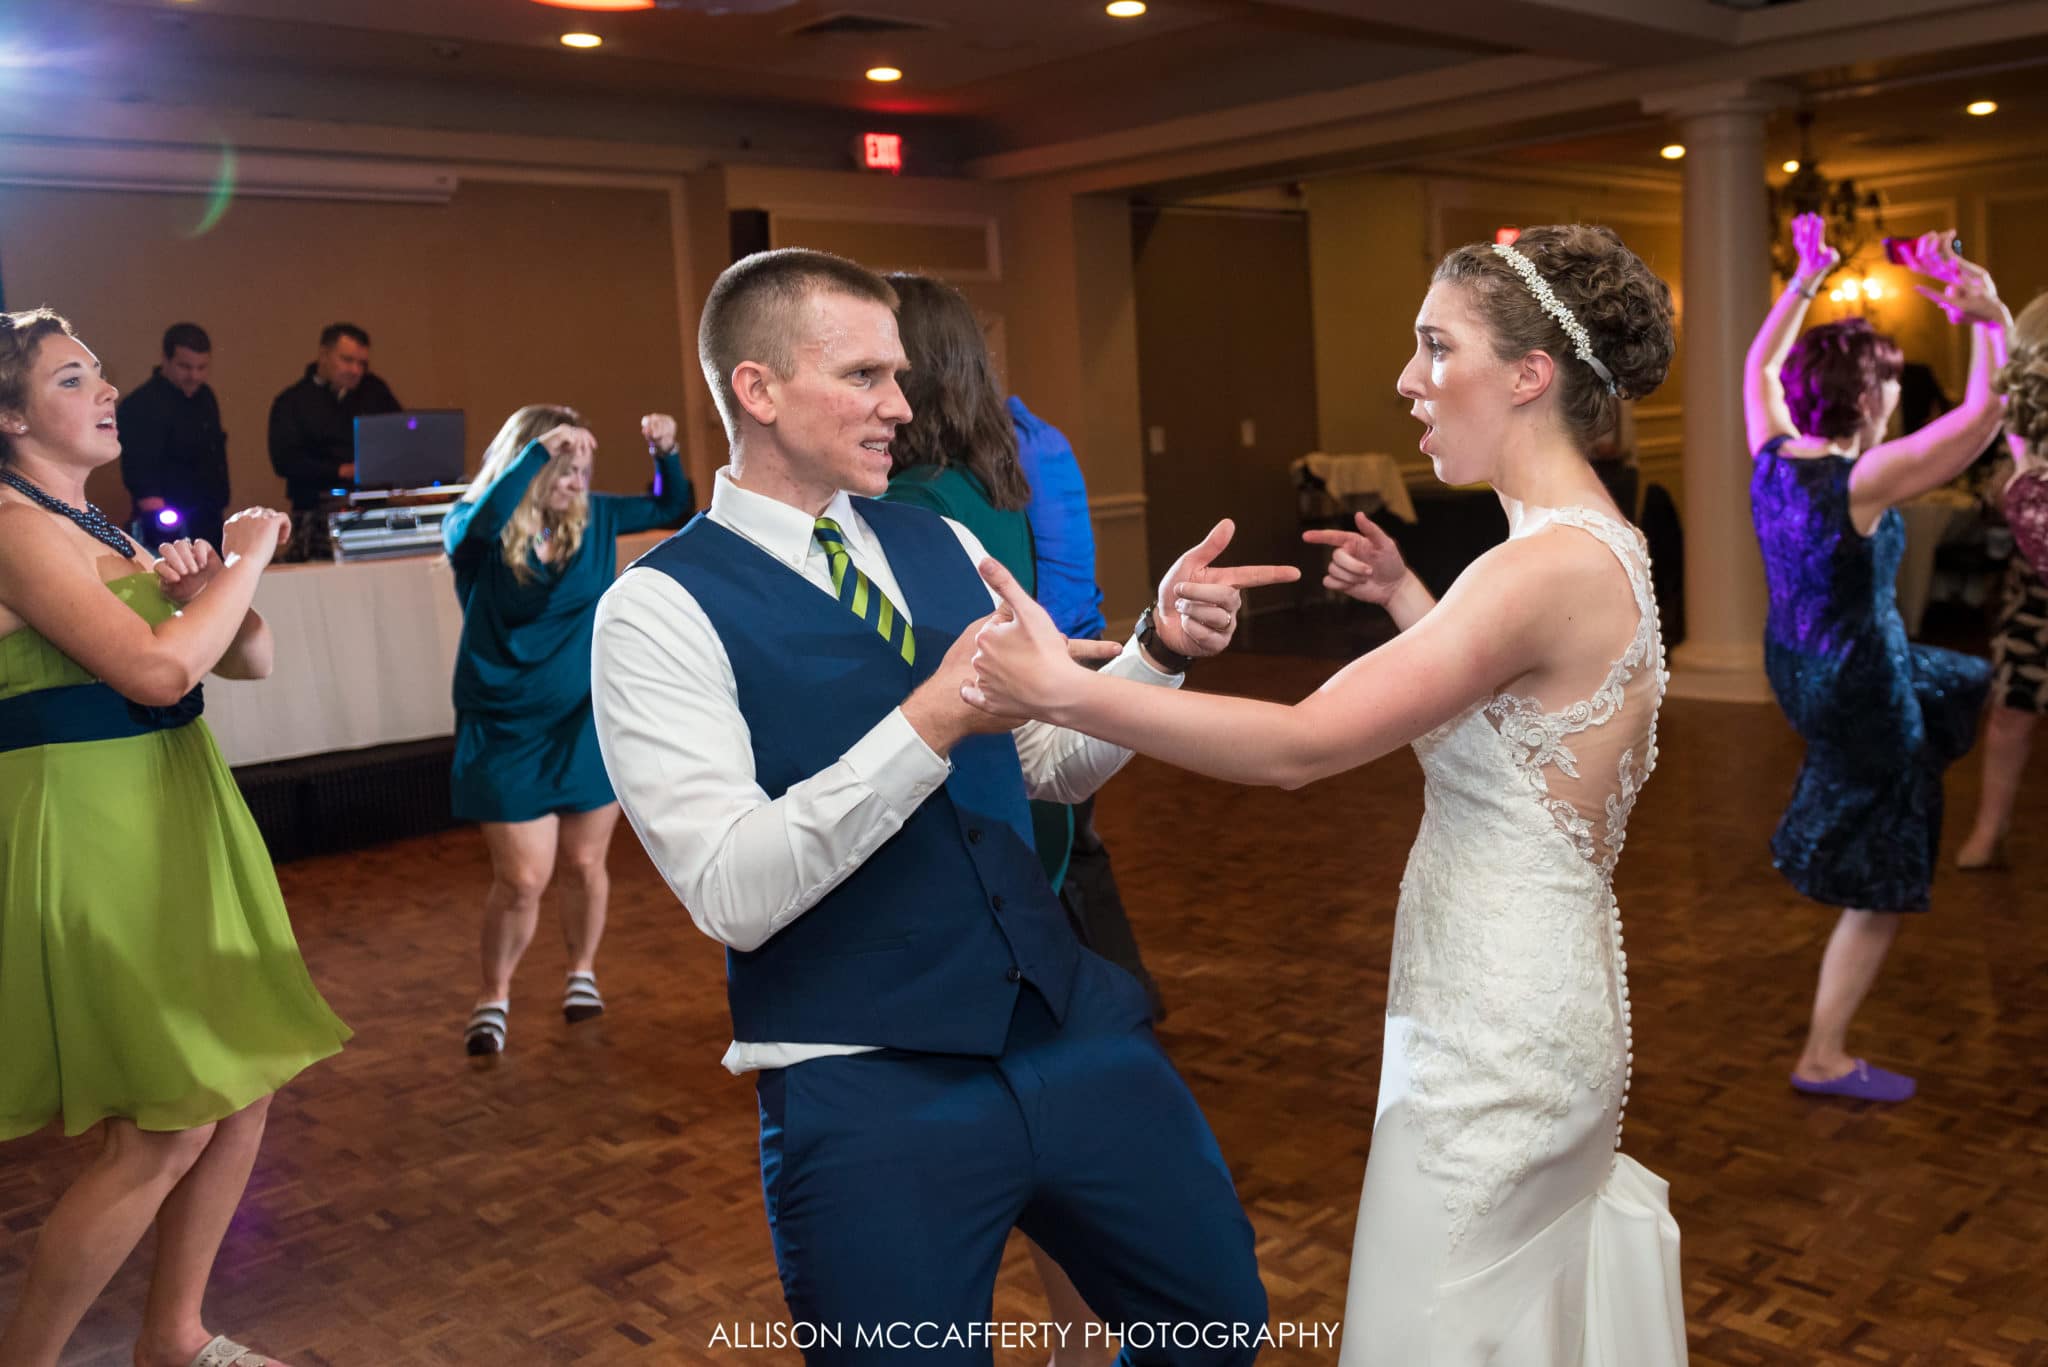 Wedding reception dancing photo in NJ